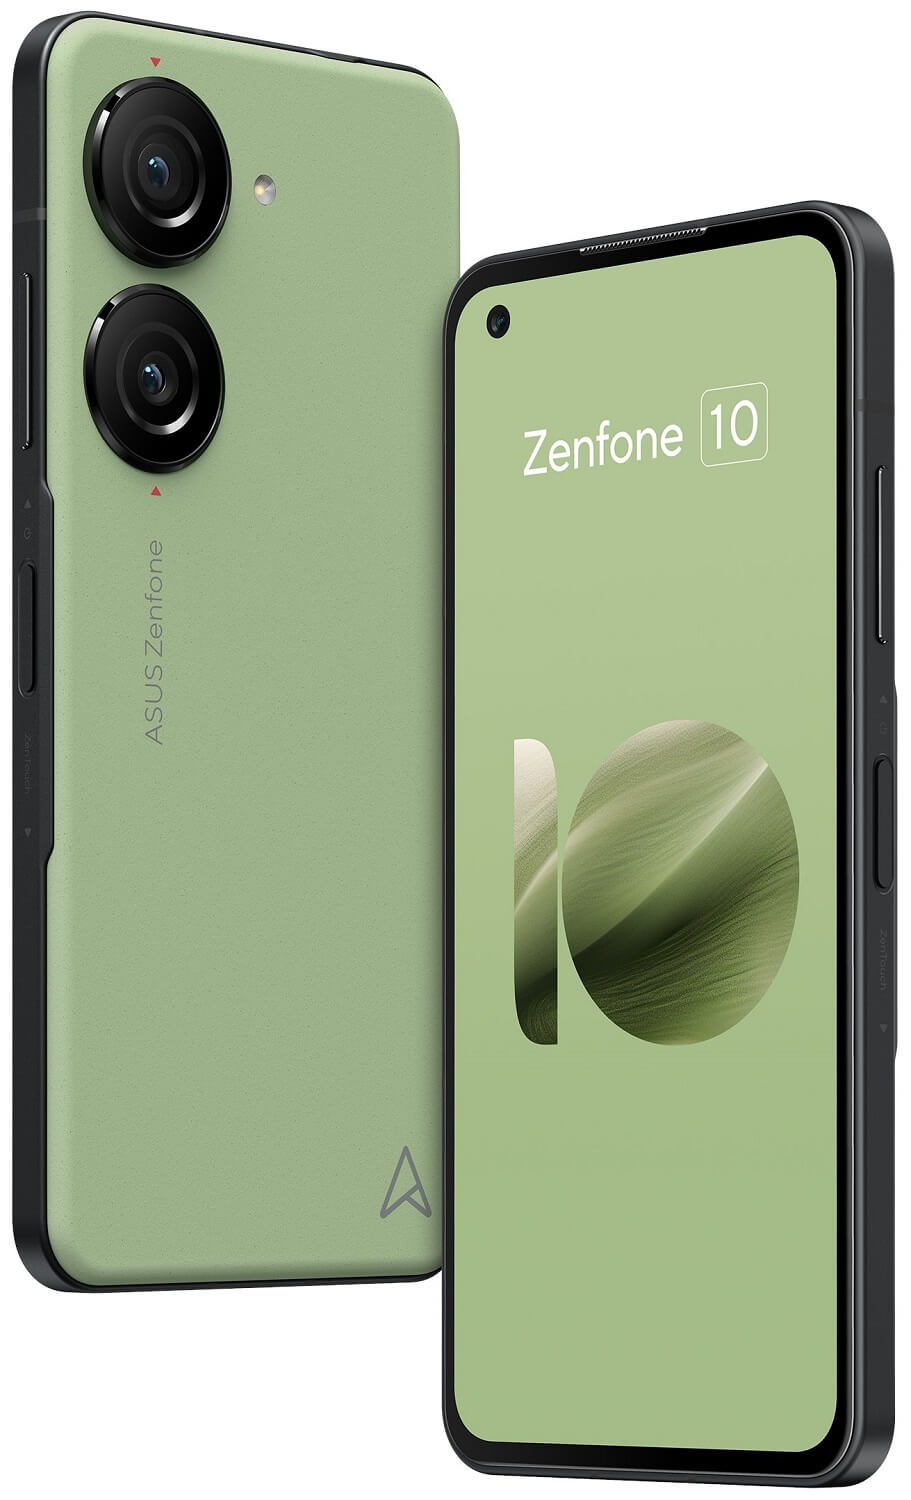 Asus Zenfone 10 1 leak